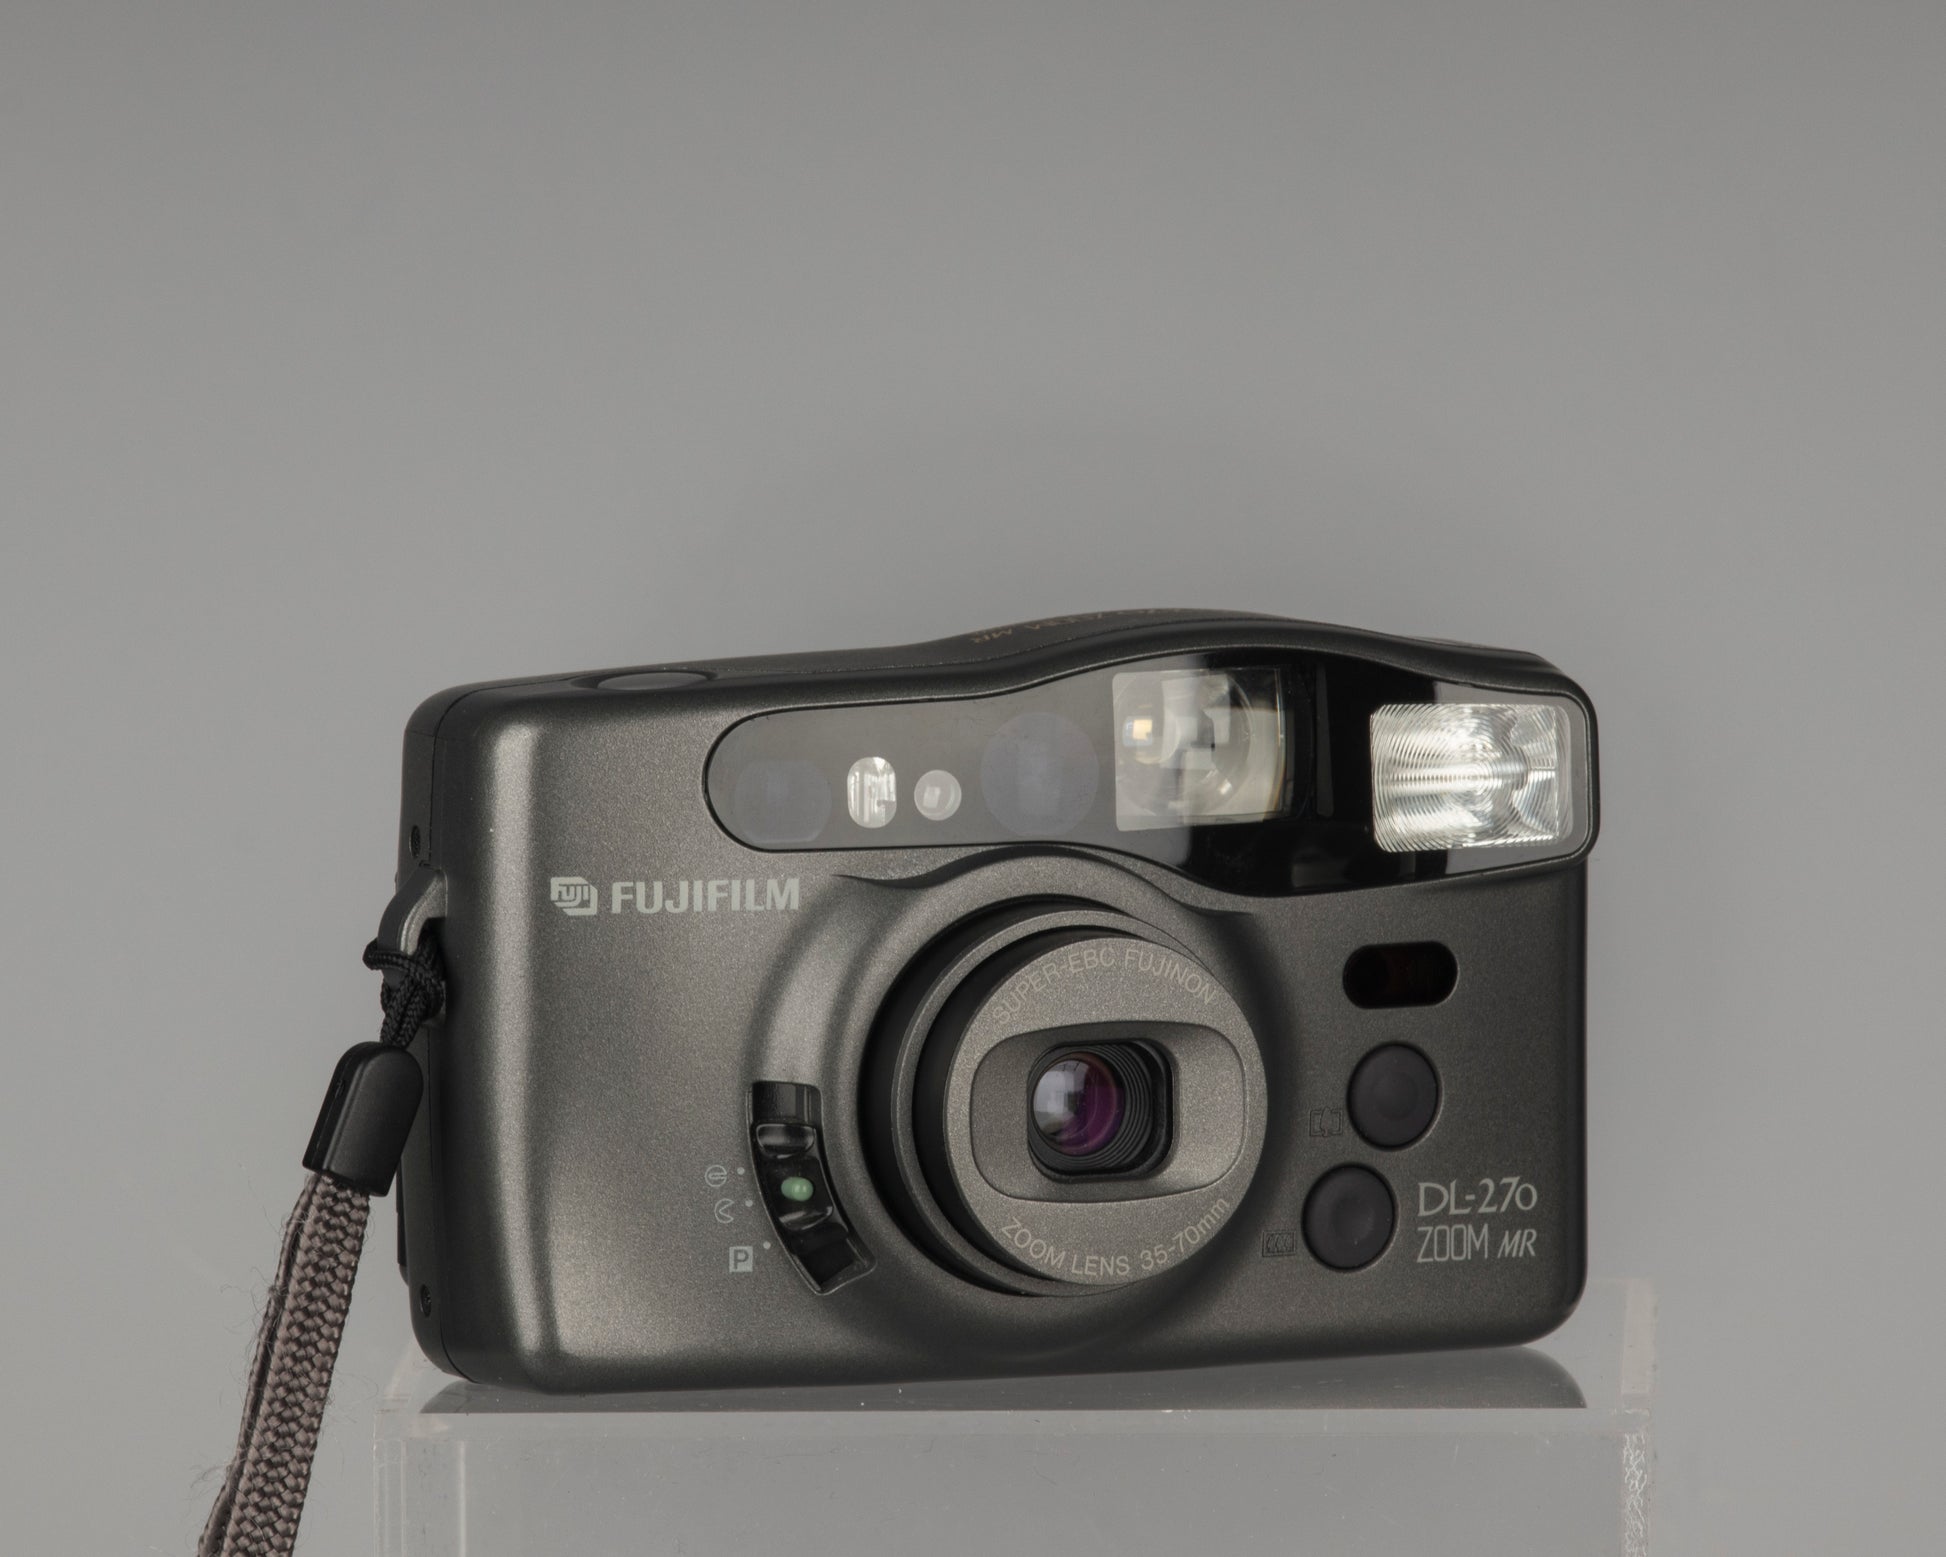 Fujifilm DL-270 Zoom MR 35mm film camera